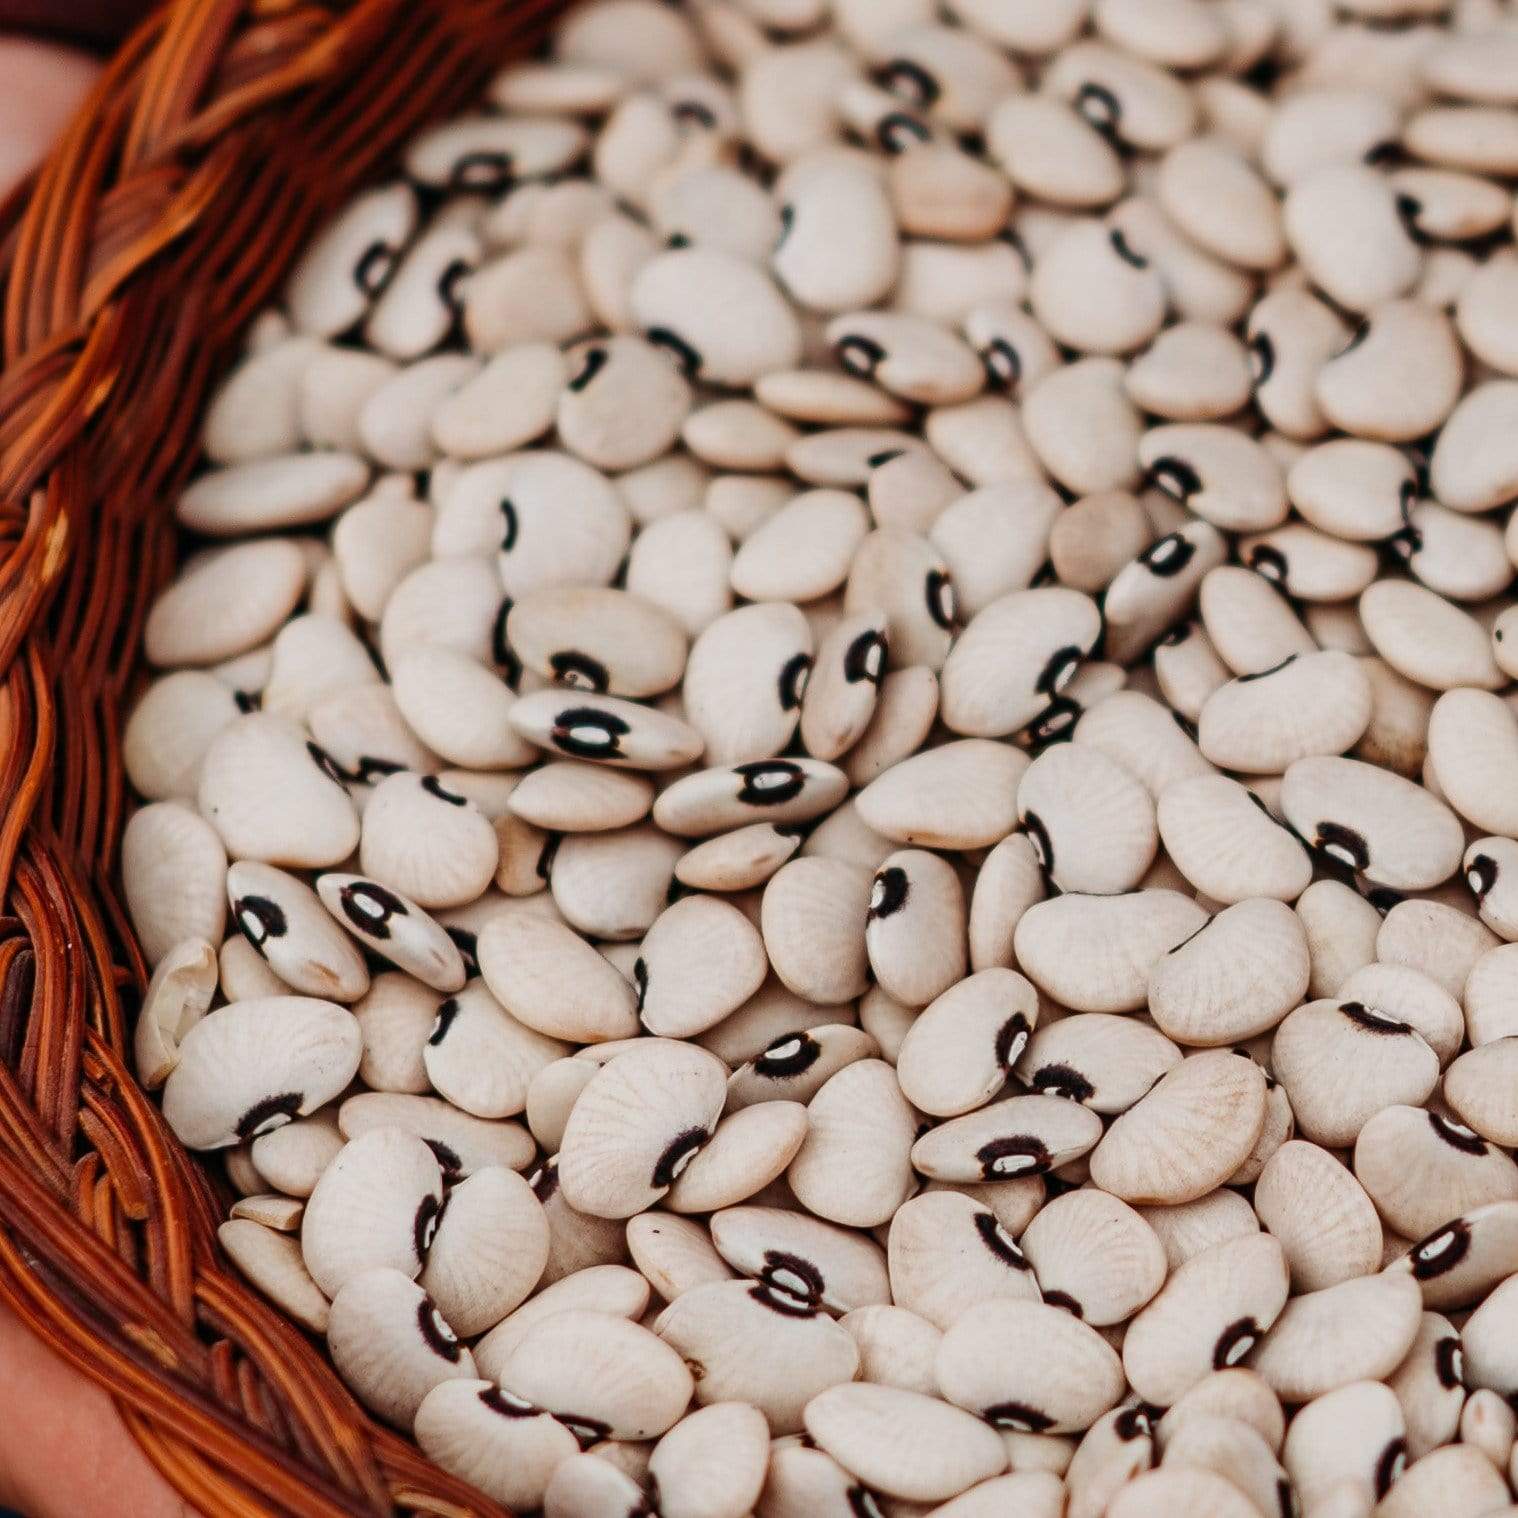 Alabama Blackeye Lima Bean (Butterbean) Seeds